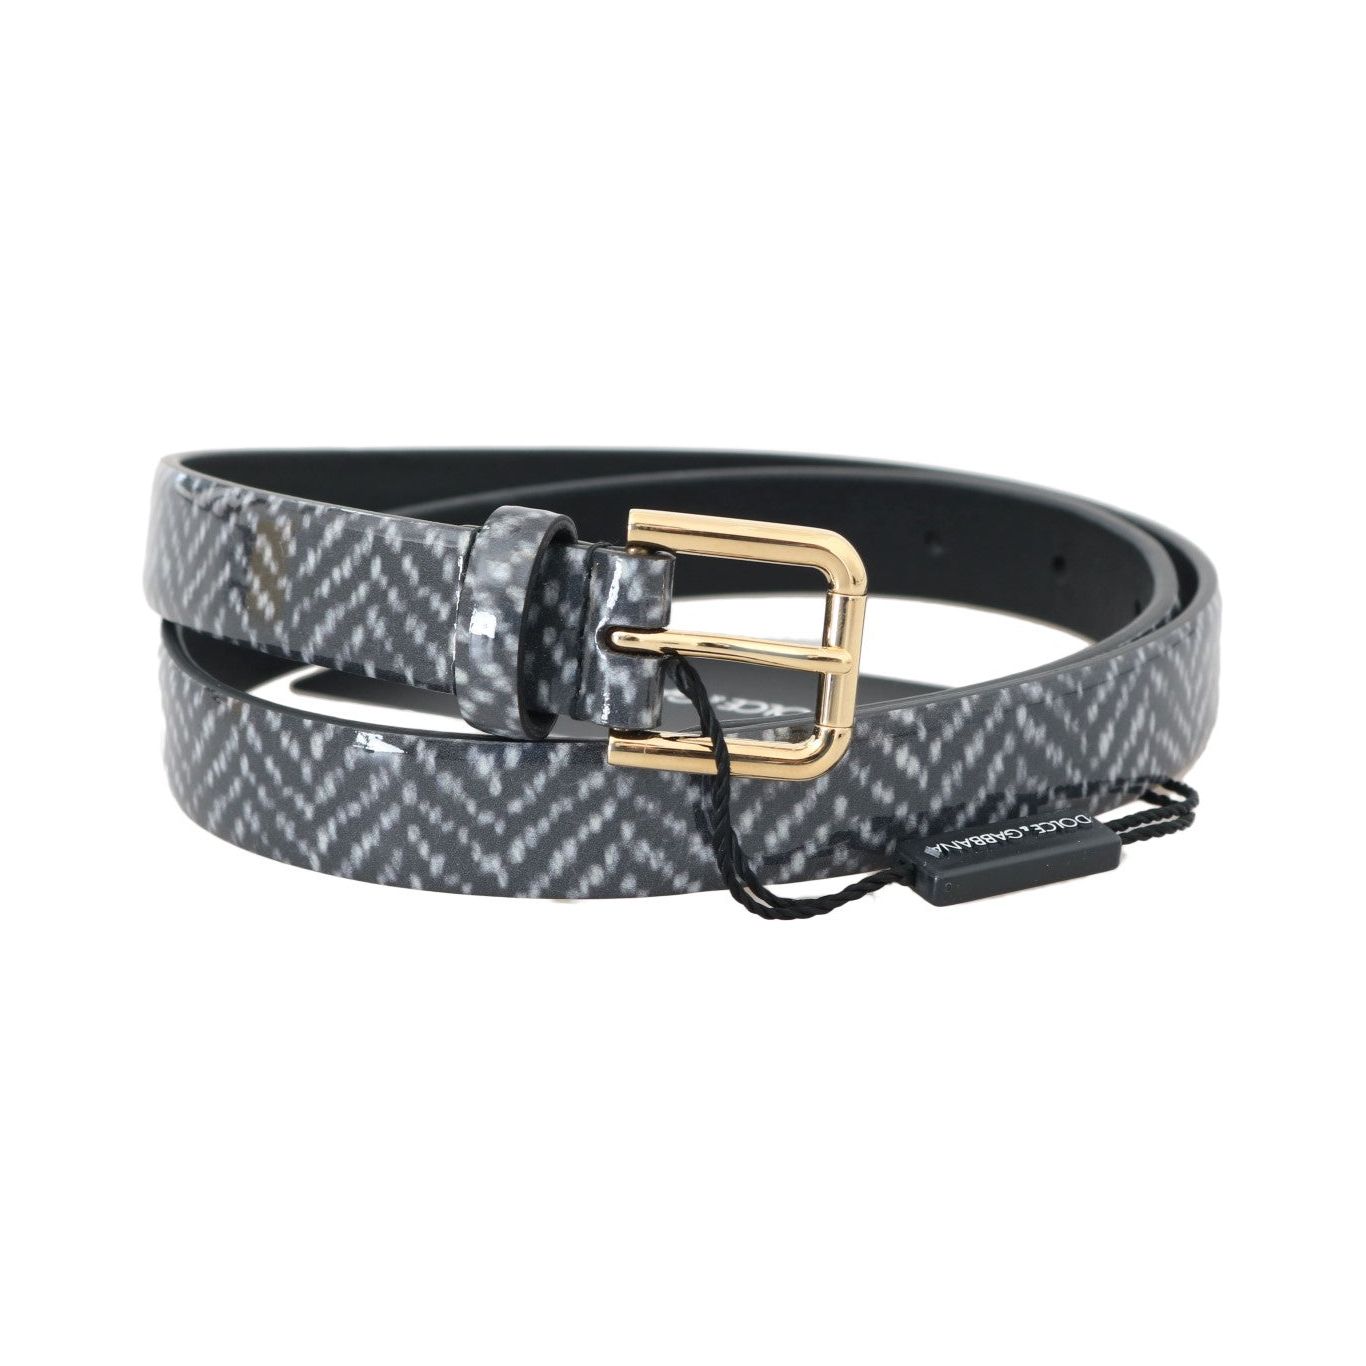 Dolce & Gabbana Elegant Chevron Leather Waist Belt Belt black-white-chevron-pattern-leather-belt 496158-black-white-chevron-pattern-leather-belt-1.jpg